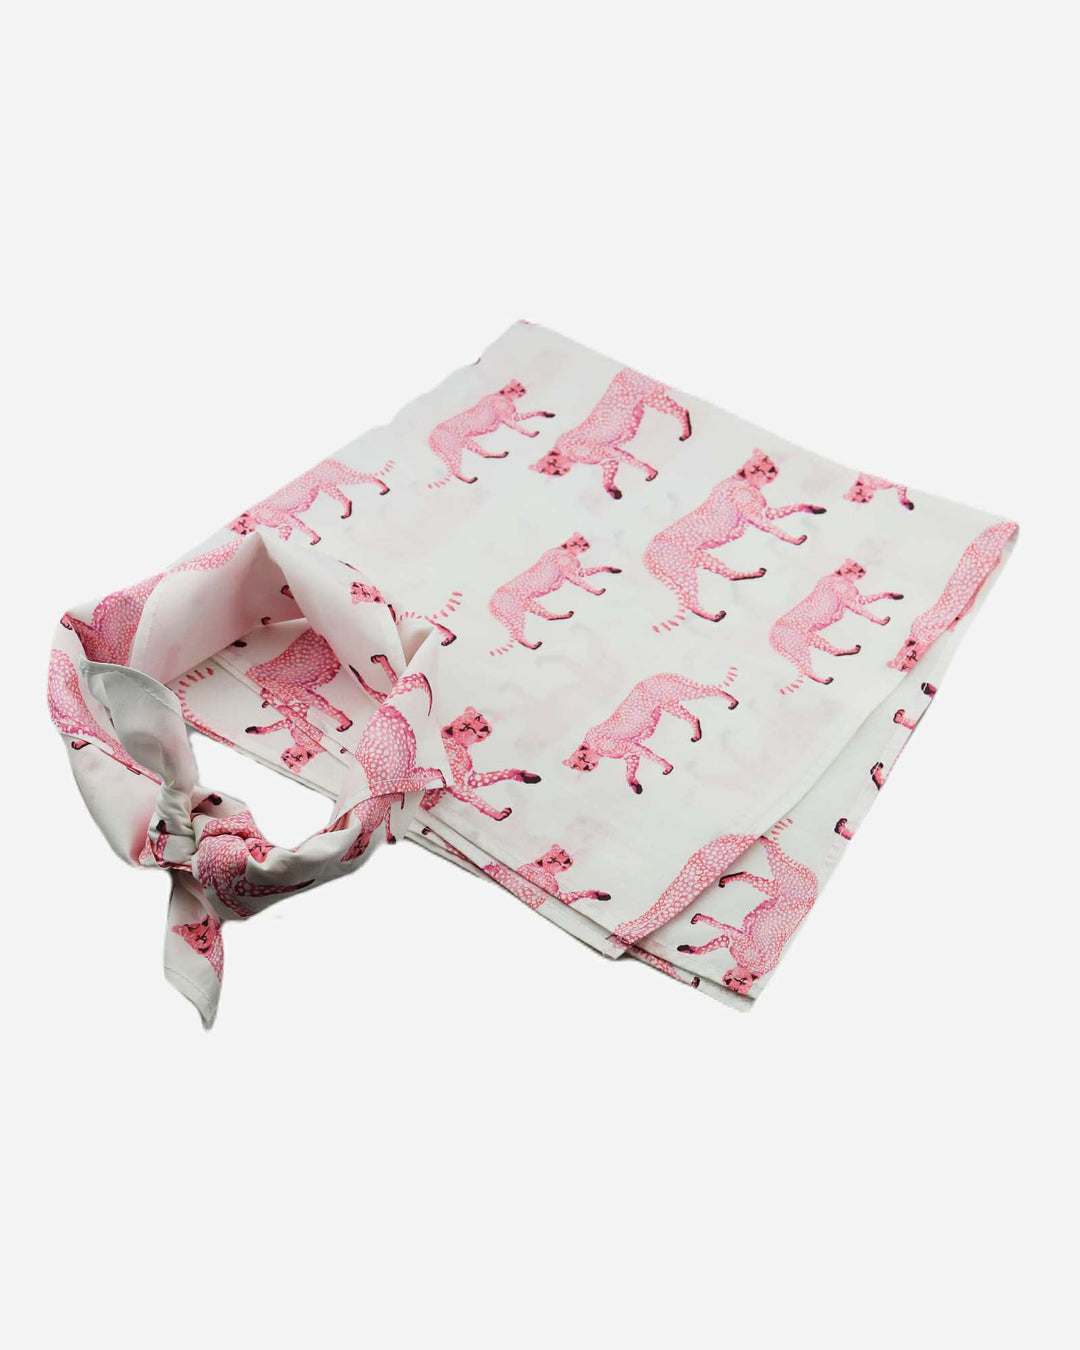 White bandana with pink cheetahs